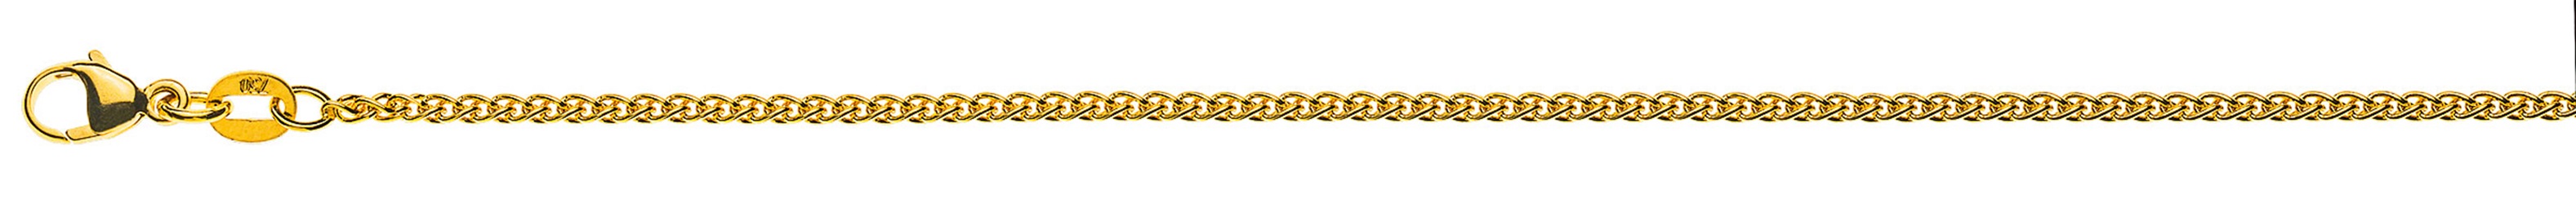 AURONOS Prestige Necklace yellow gold 18K cable chain 50cm 1.6mm